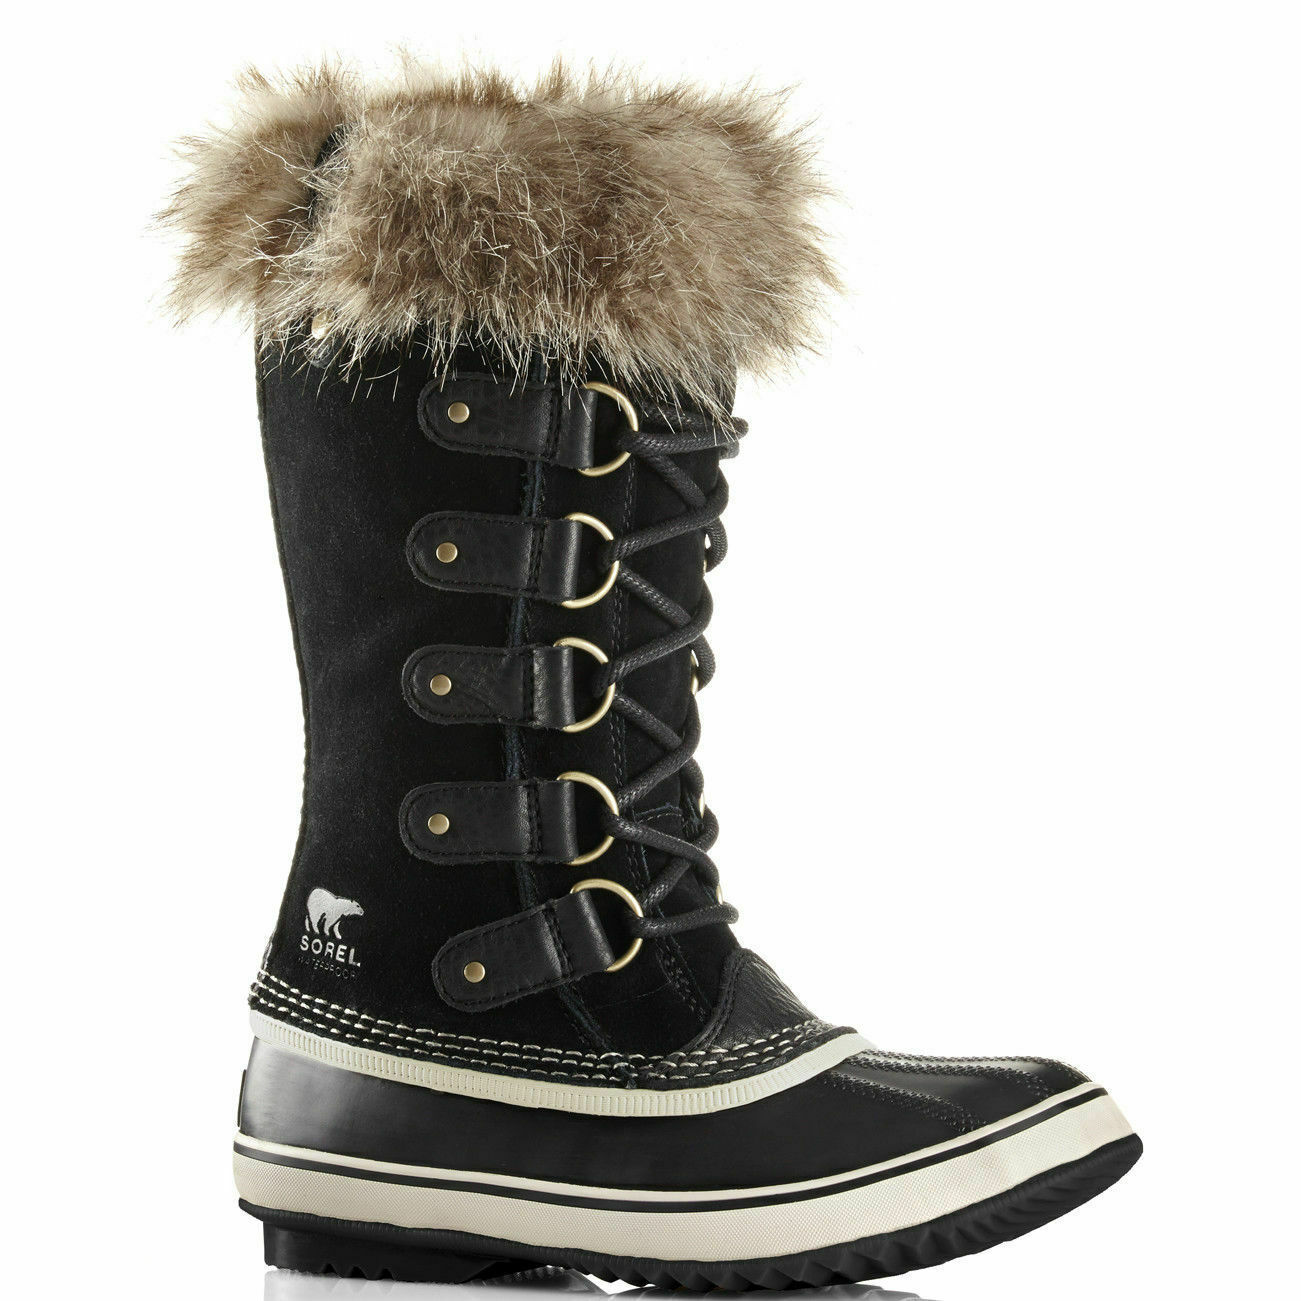 Sorel Joan of Arctic NL 2429-010 Leather Waterproof Boots New! - $126.89